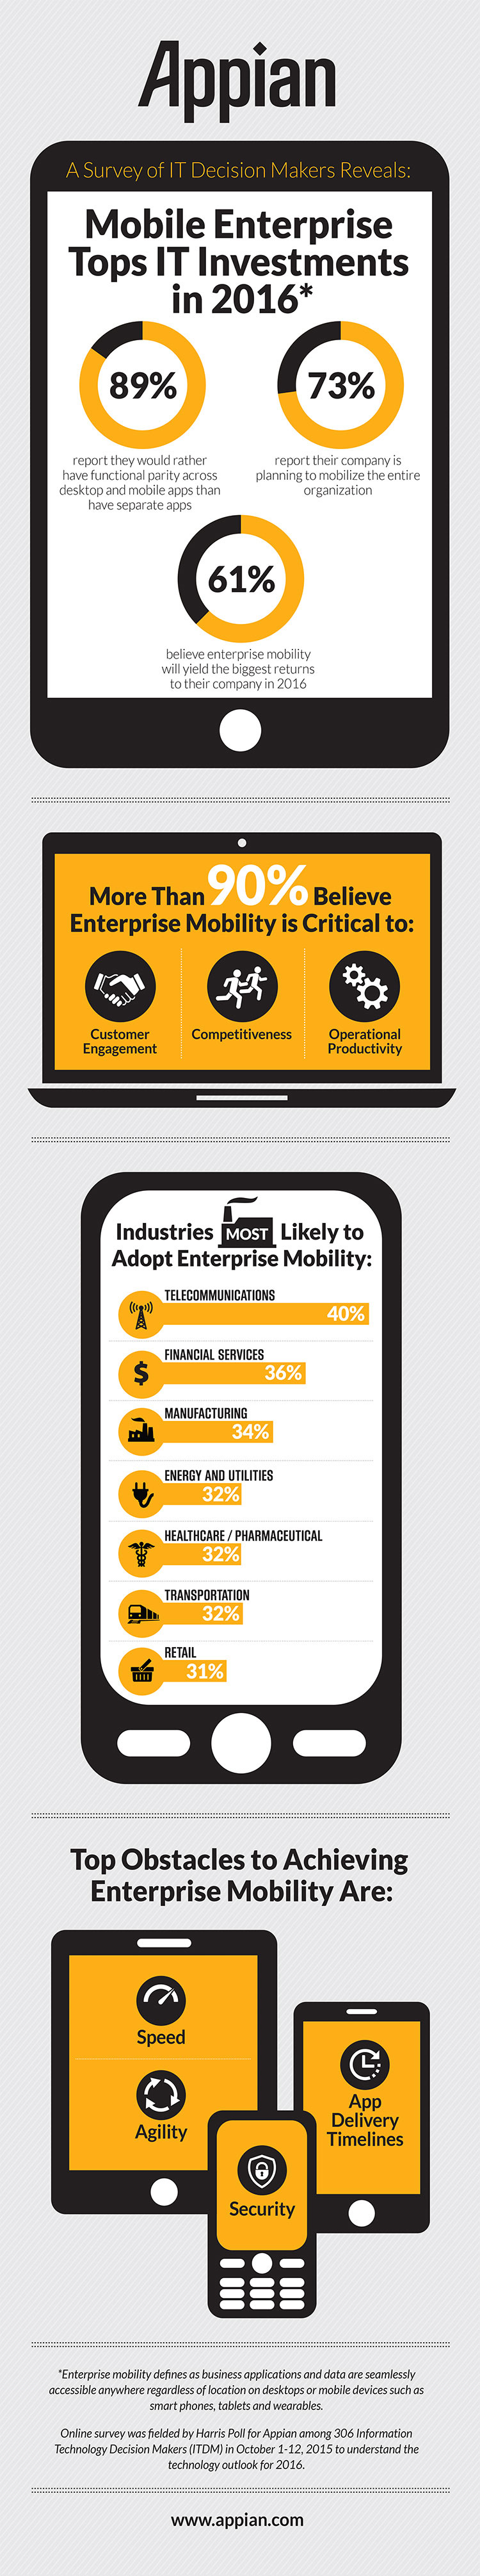 appian_mobility_survey_infographic